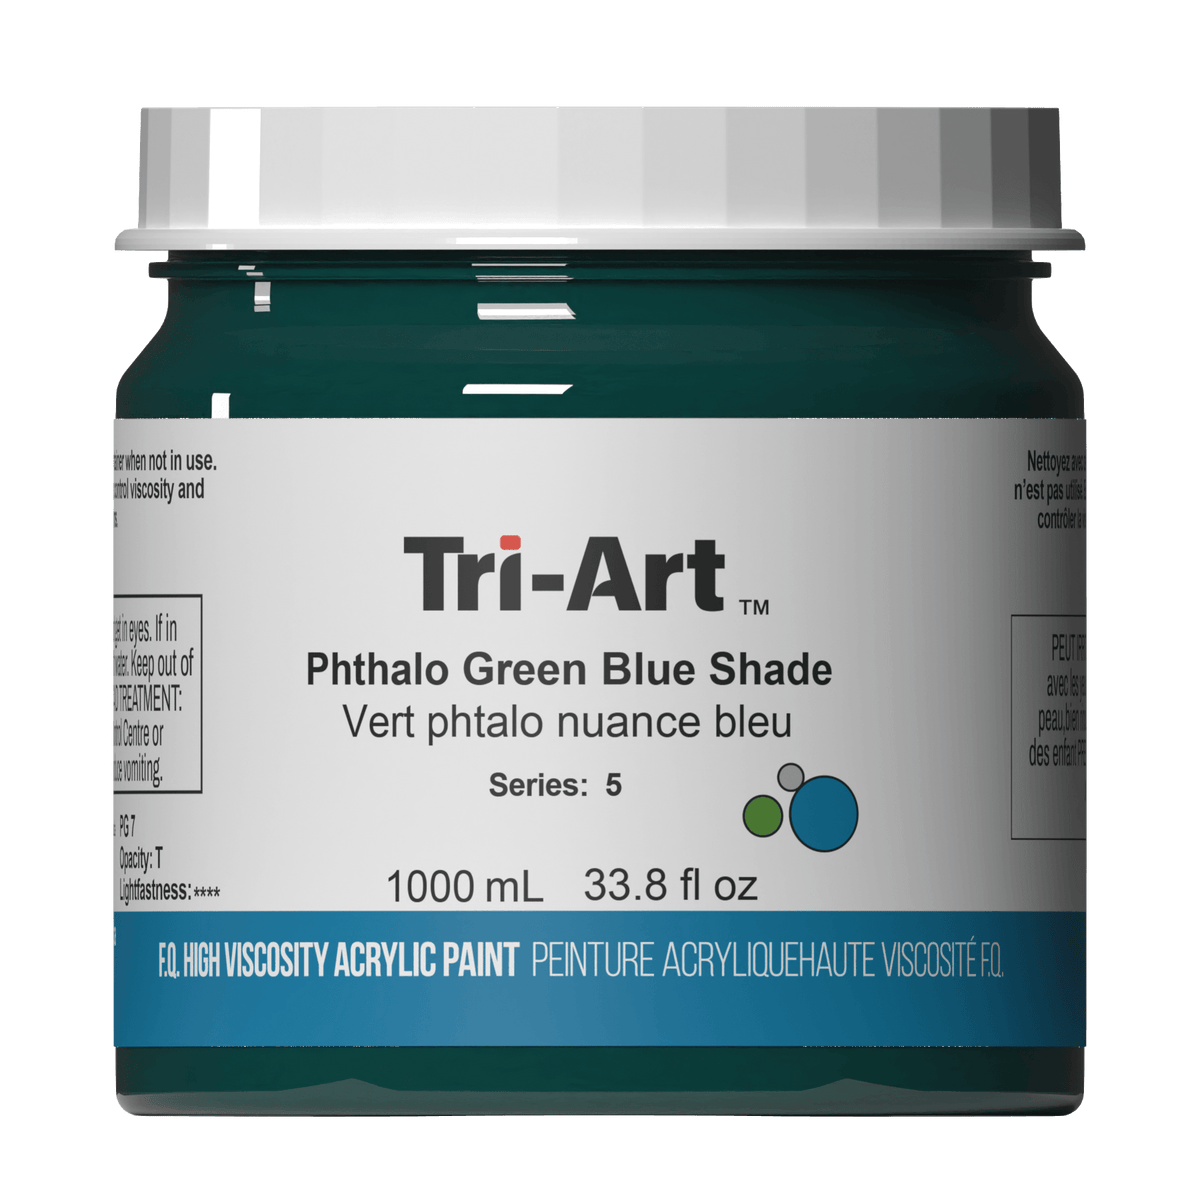 Tri-Art High Viscosity - Phthalo Green Blue Shade - Tri-Art Mfg.